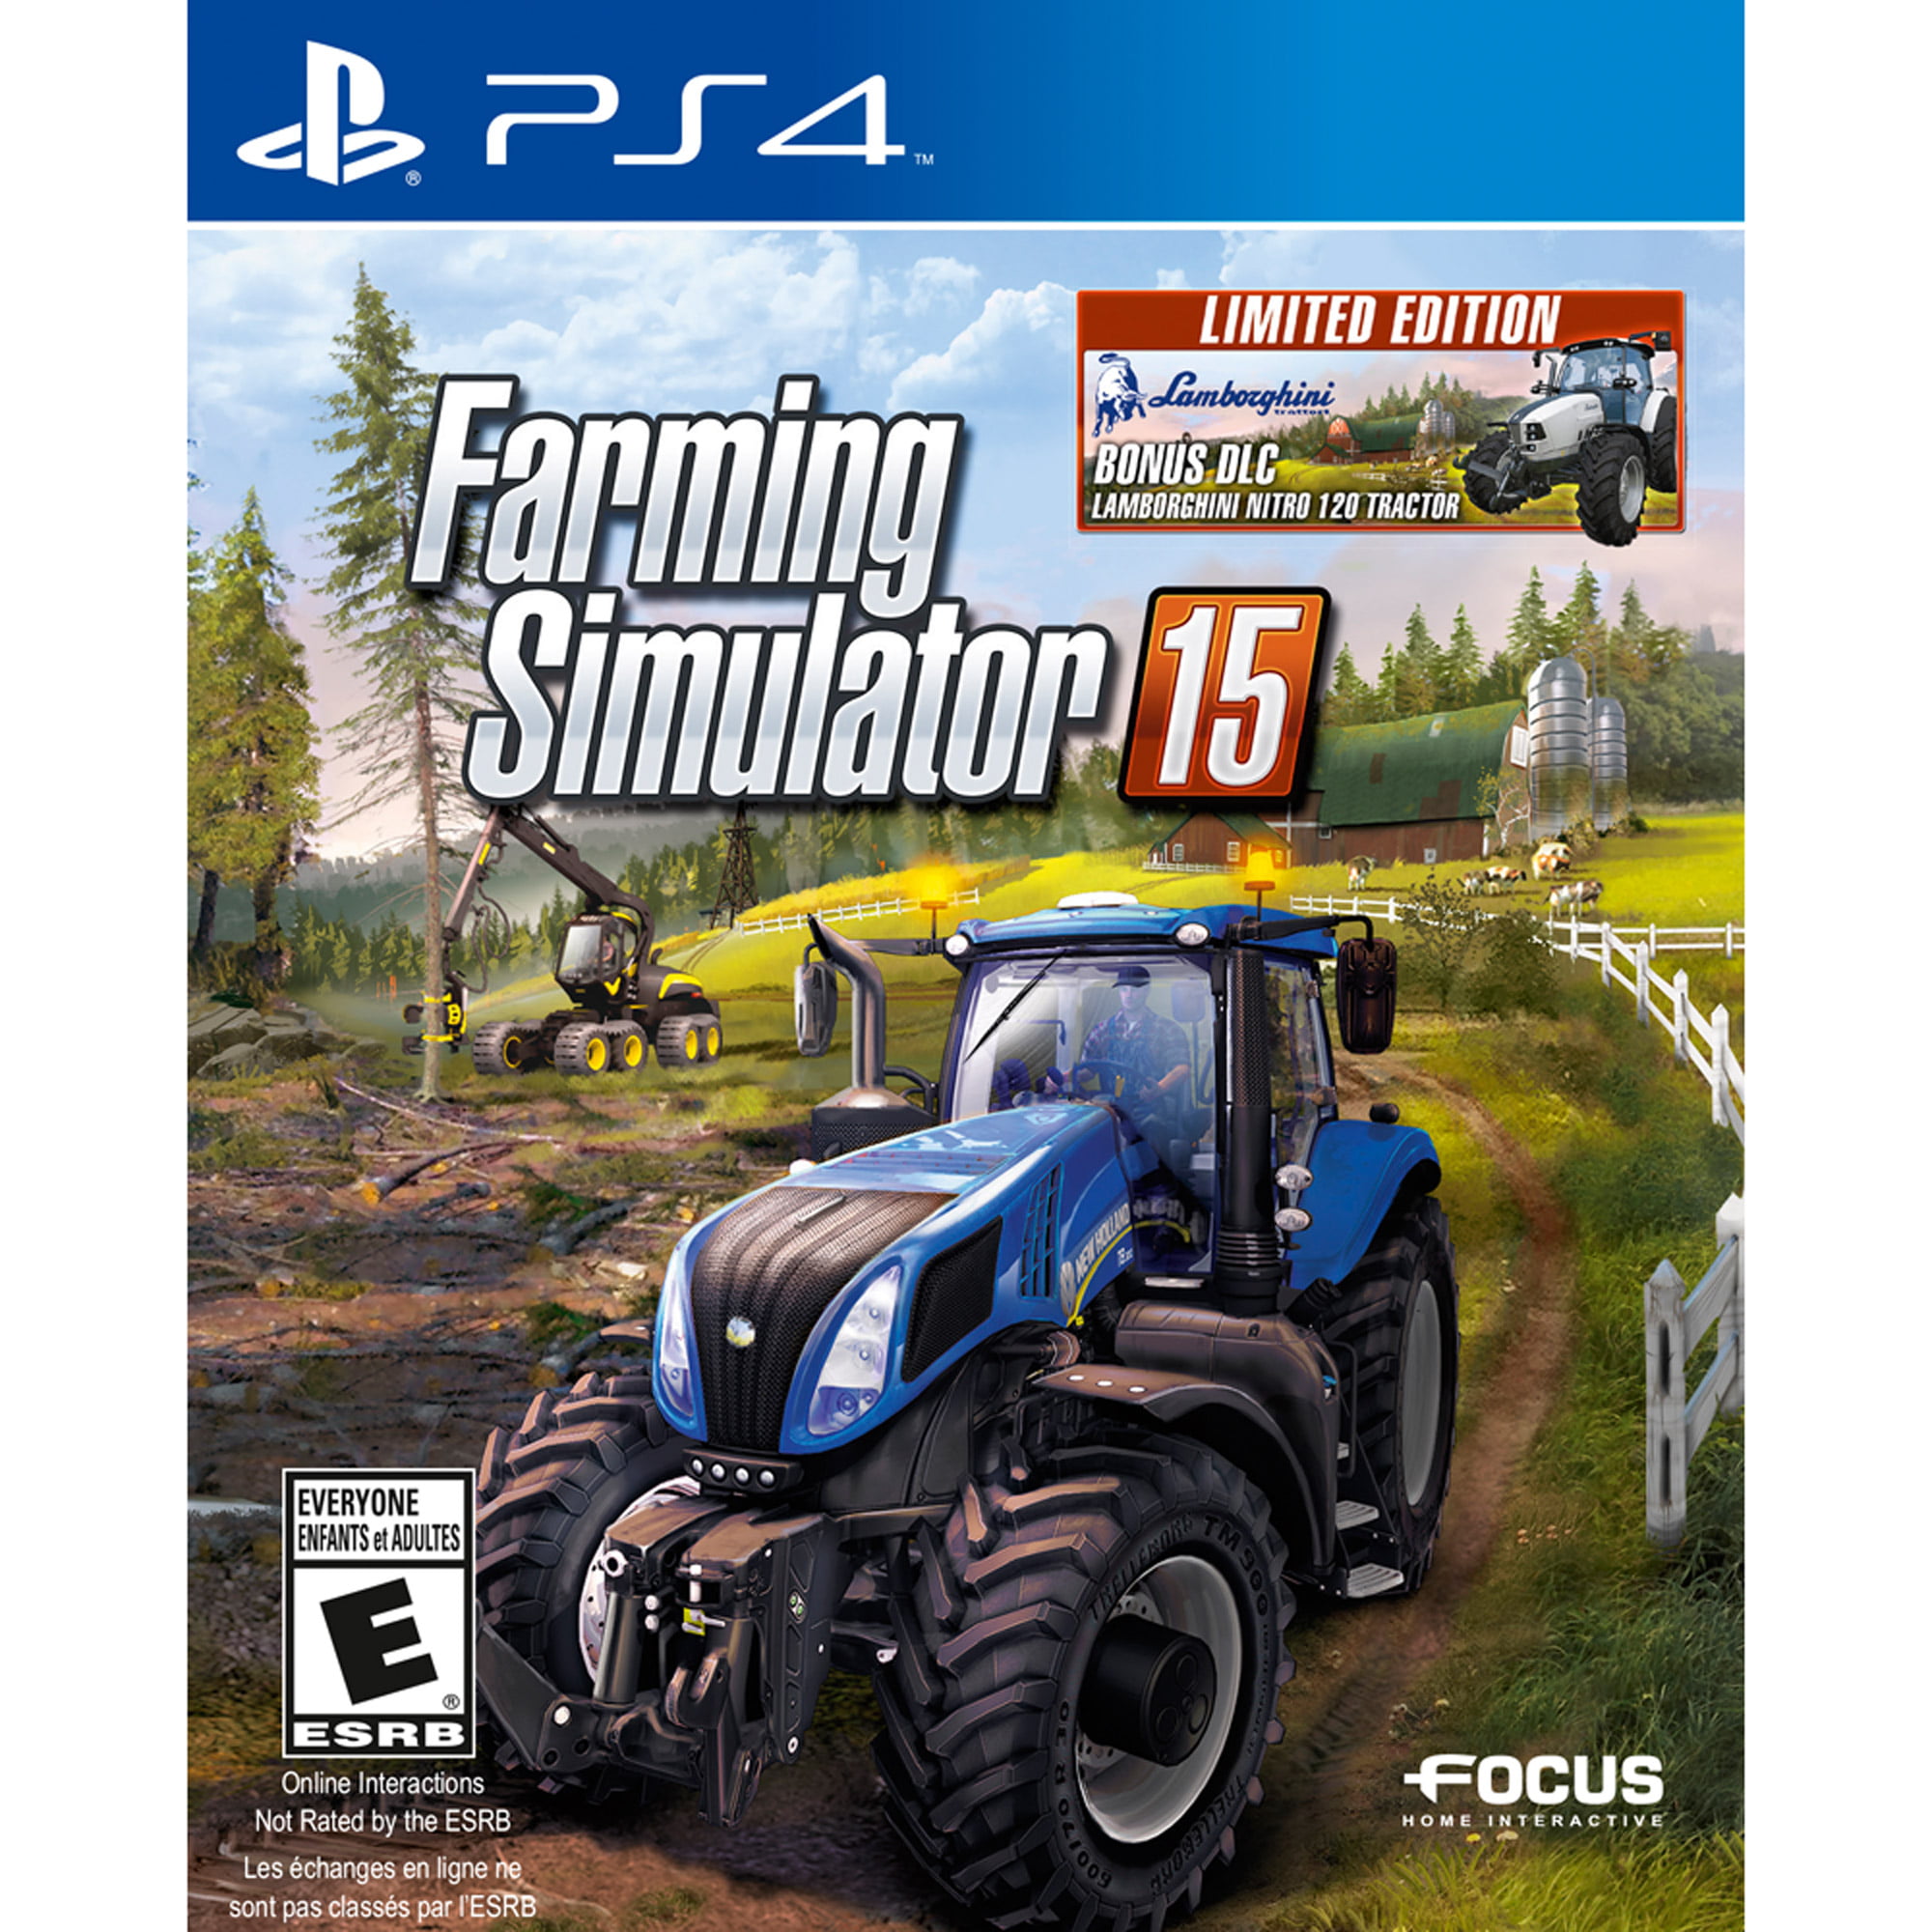 Farming simulator 19 ps3 download pc